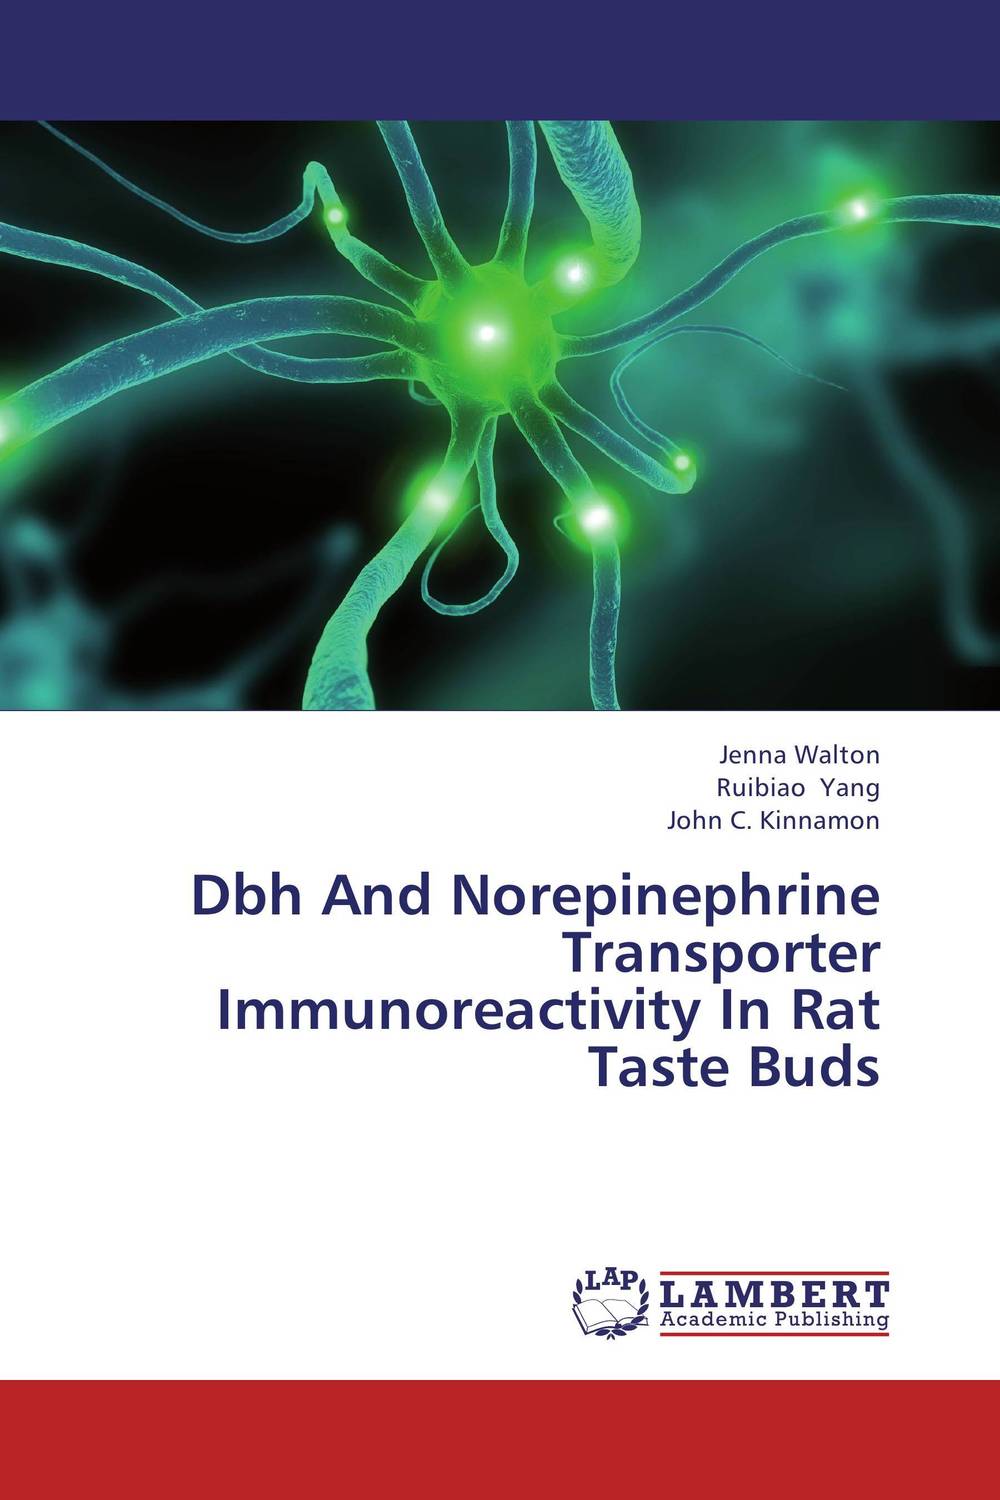 Dbh And Norepinephrine Transporter Immunoreactivity In Rat Taste Buds